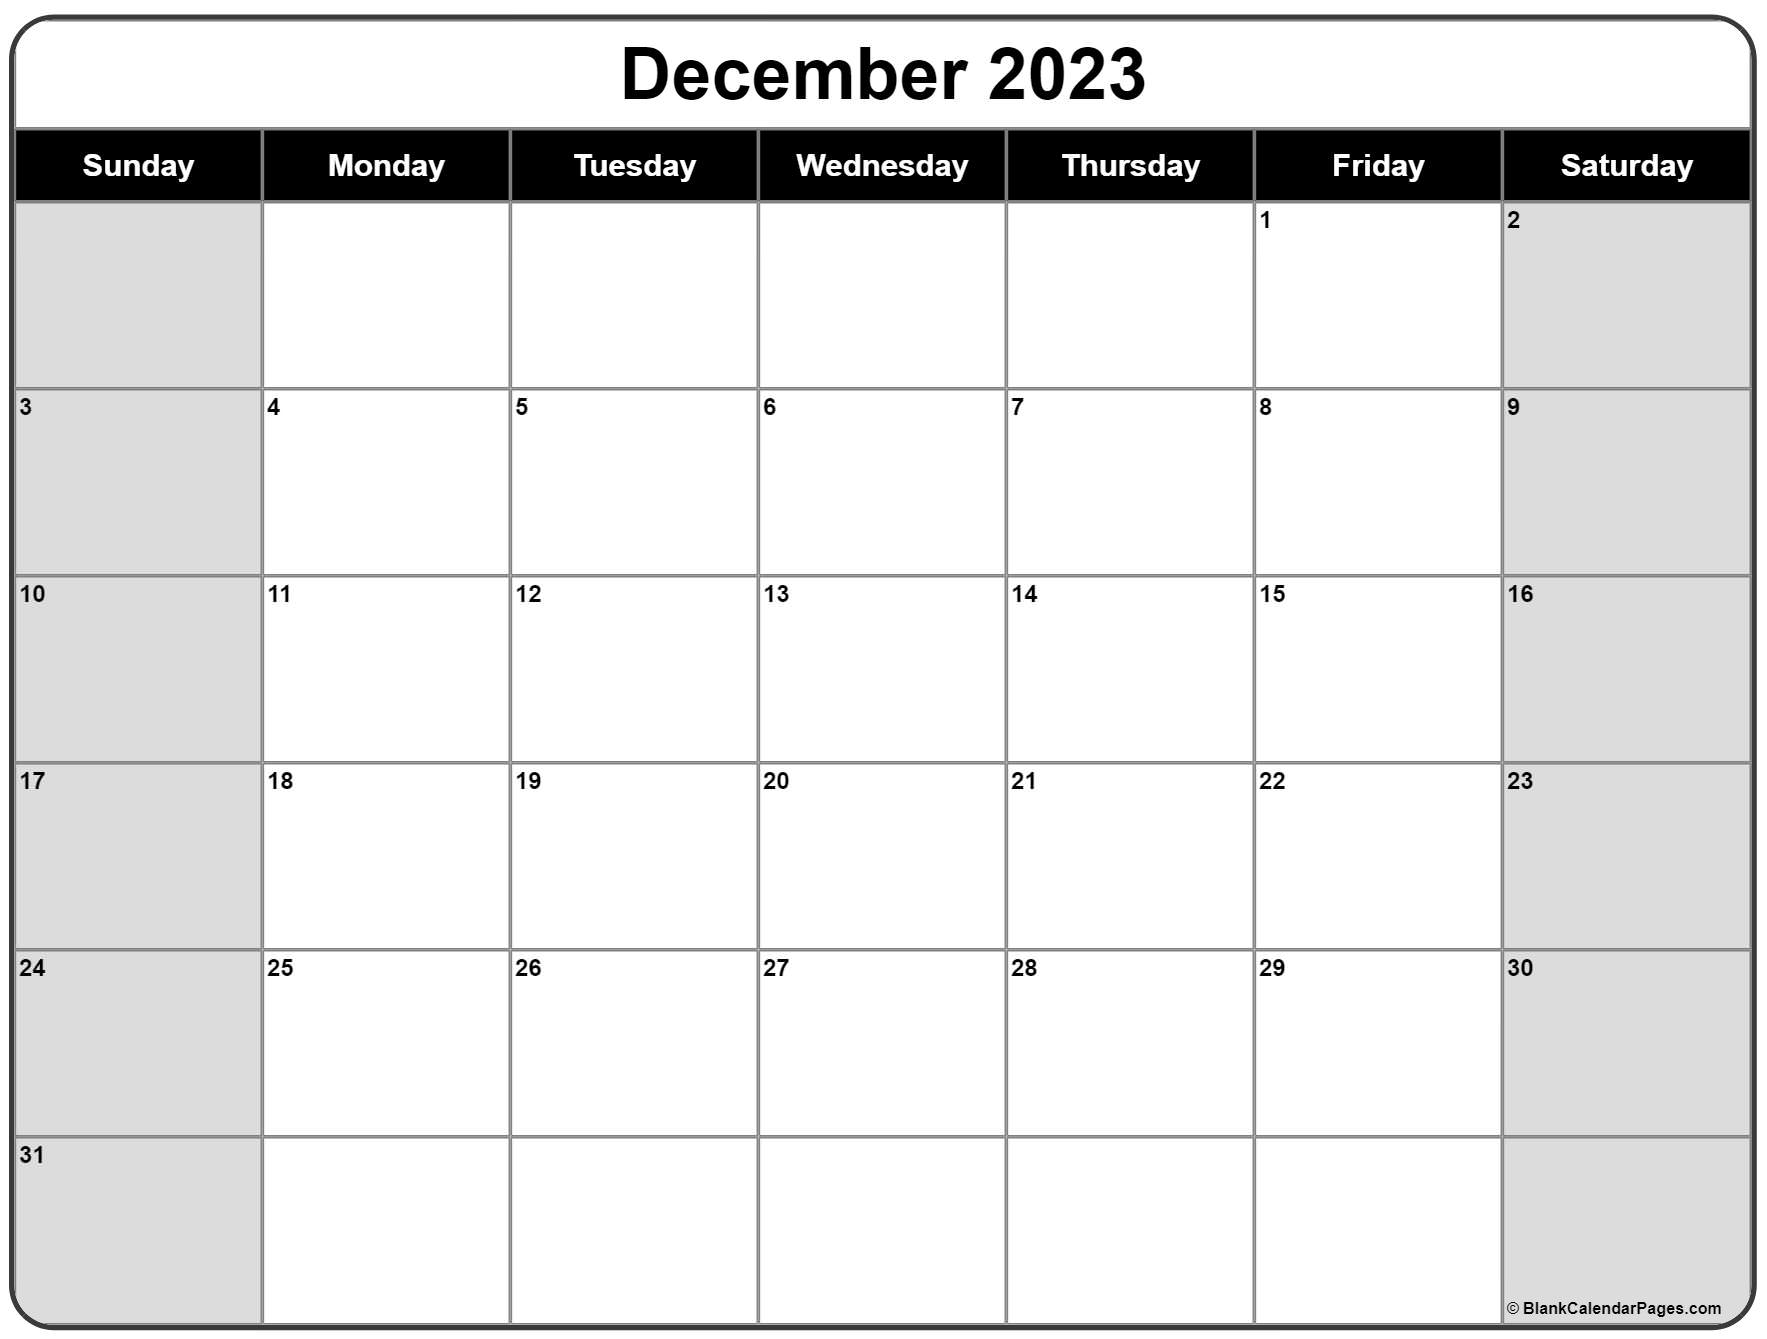 december-2024-calendar-pdf-word-excel